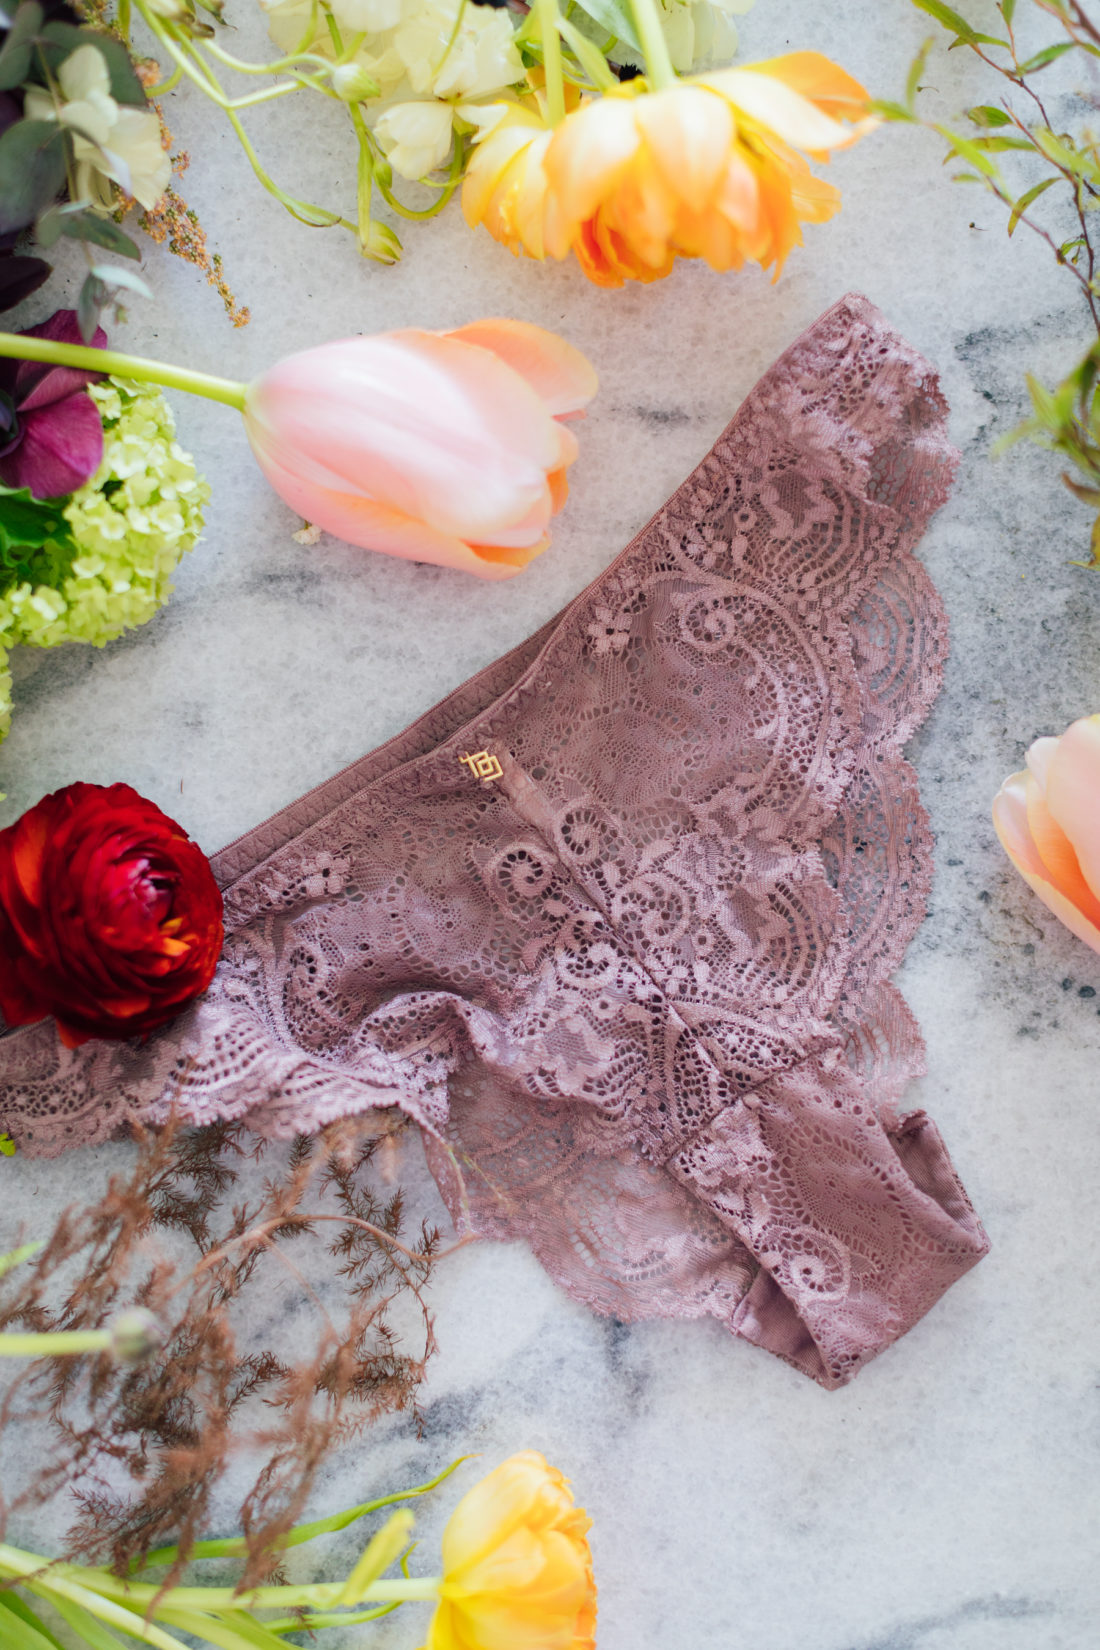 Eva Amurri Martino shares her love for Thirdlove lace underwear